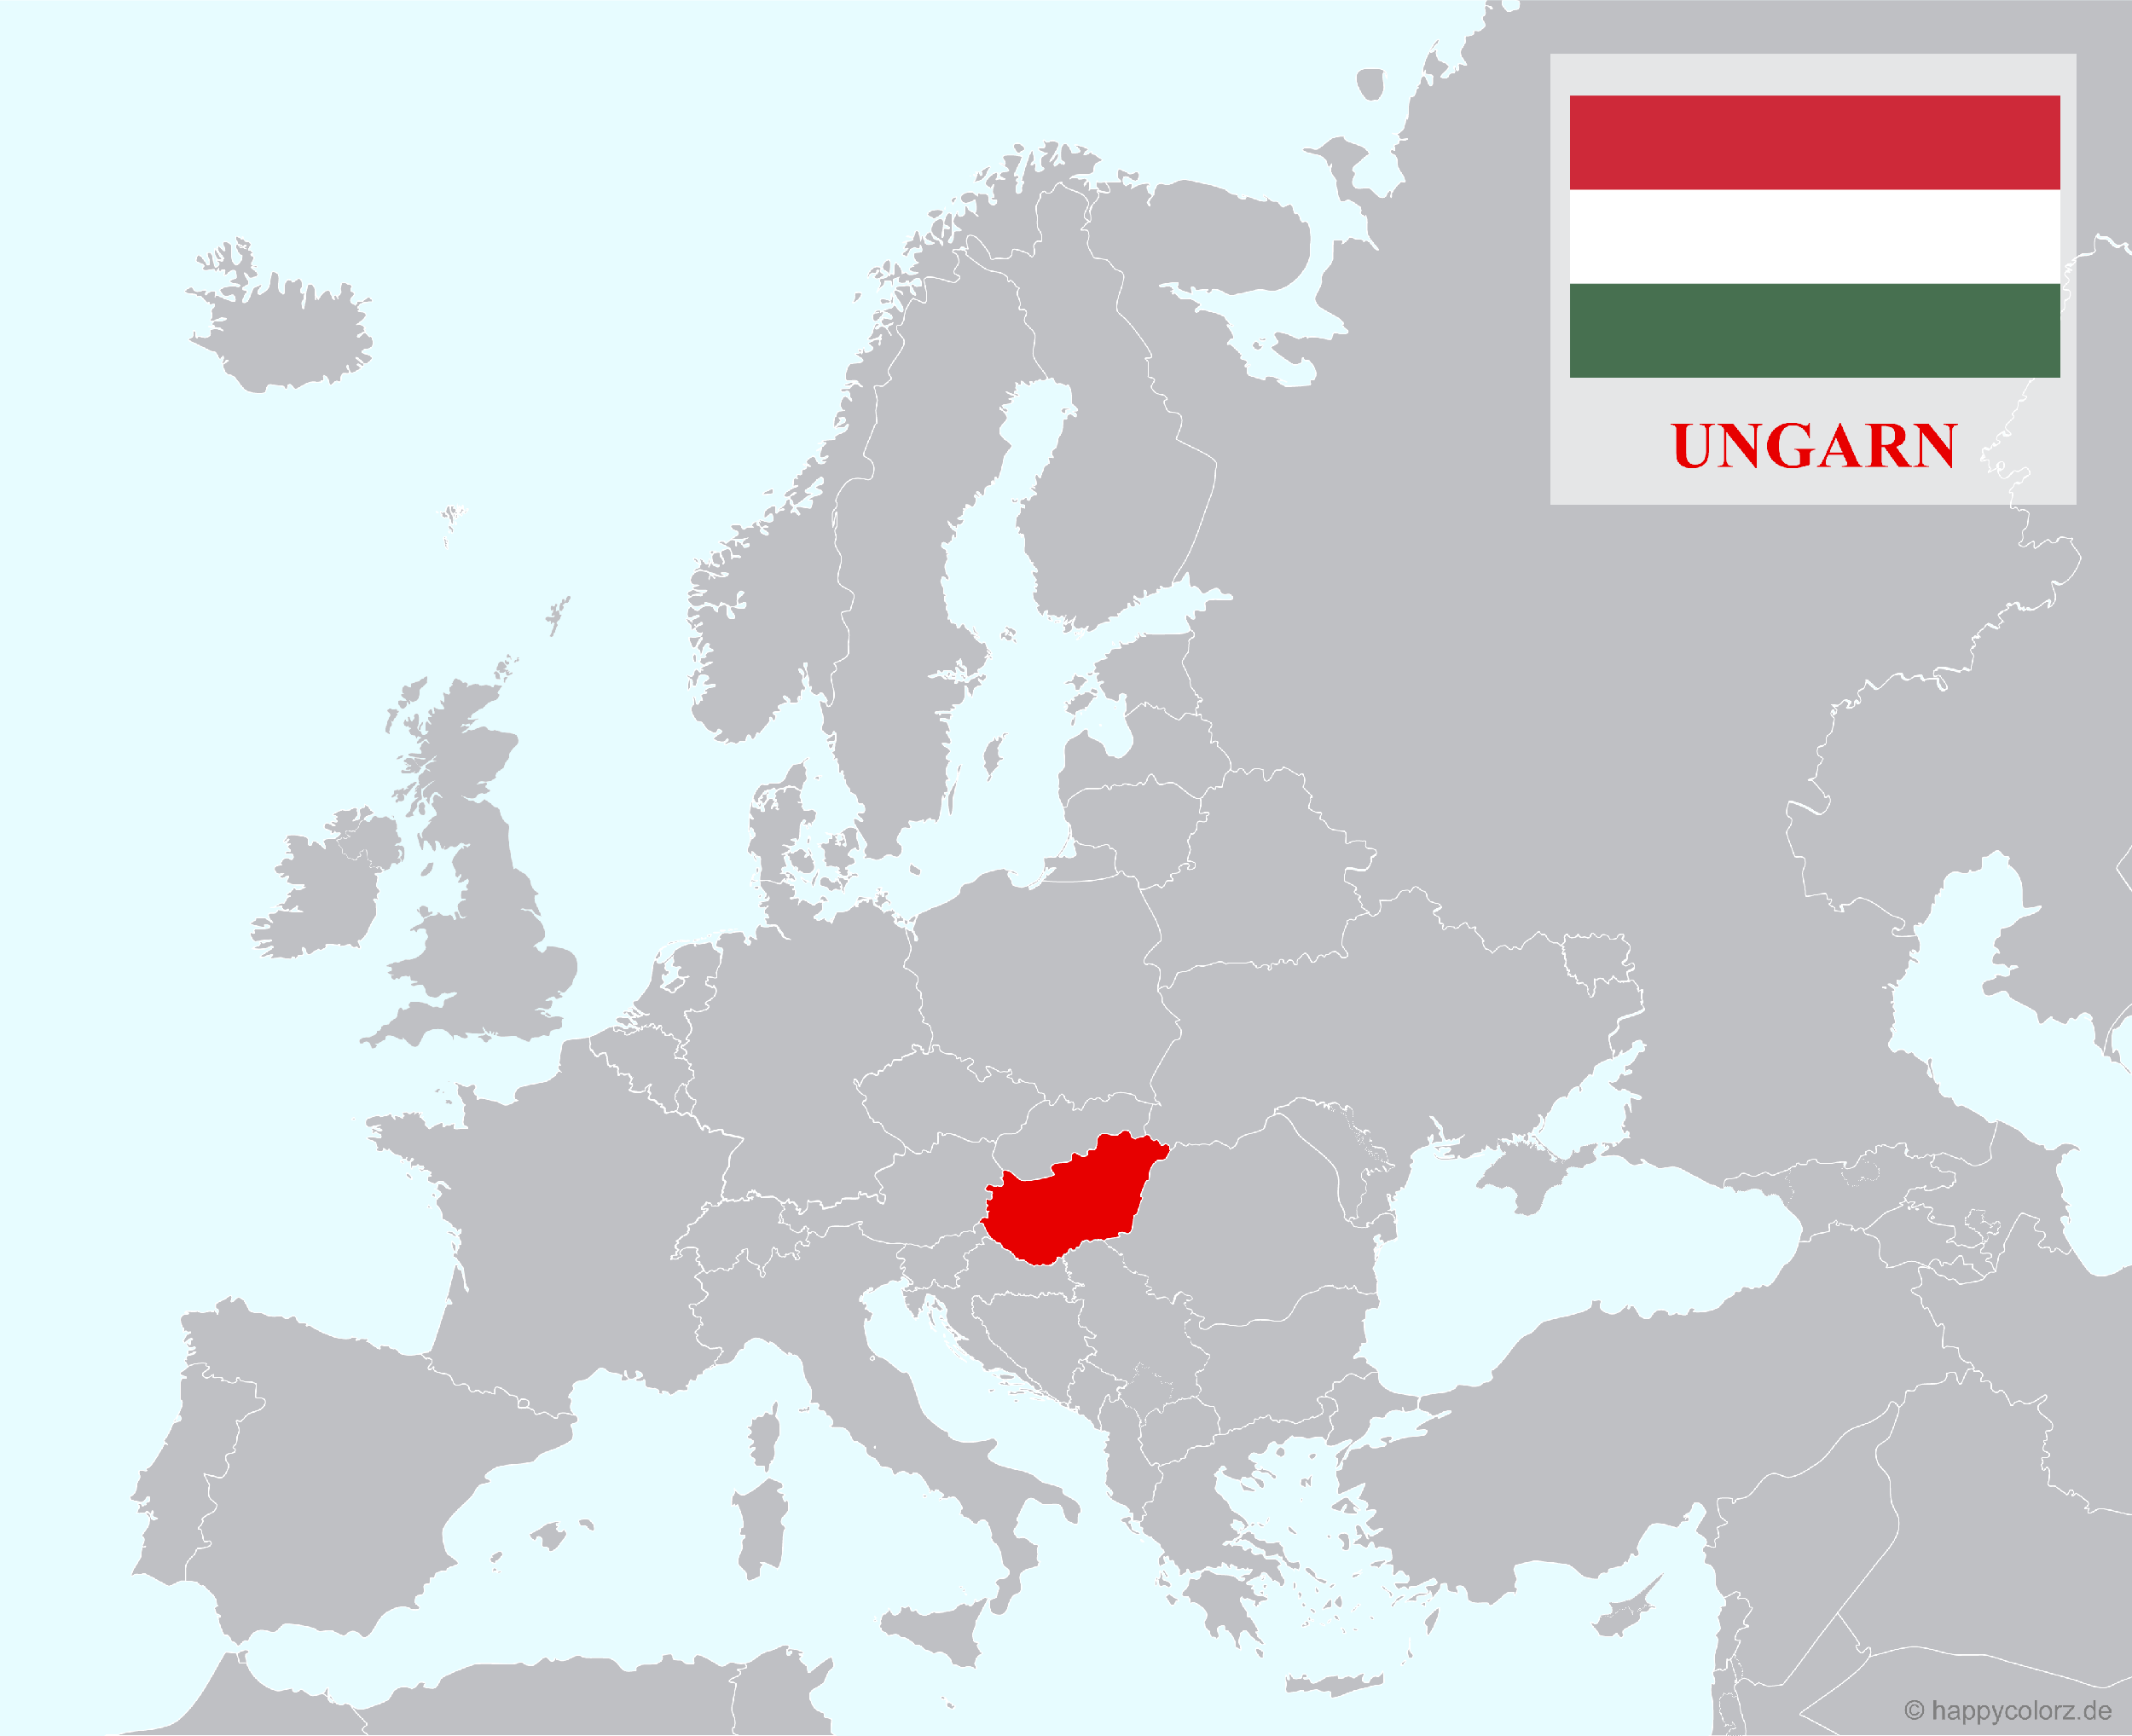 Europakarte mit Ungarn als hervorgehobenes Land